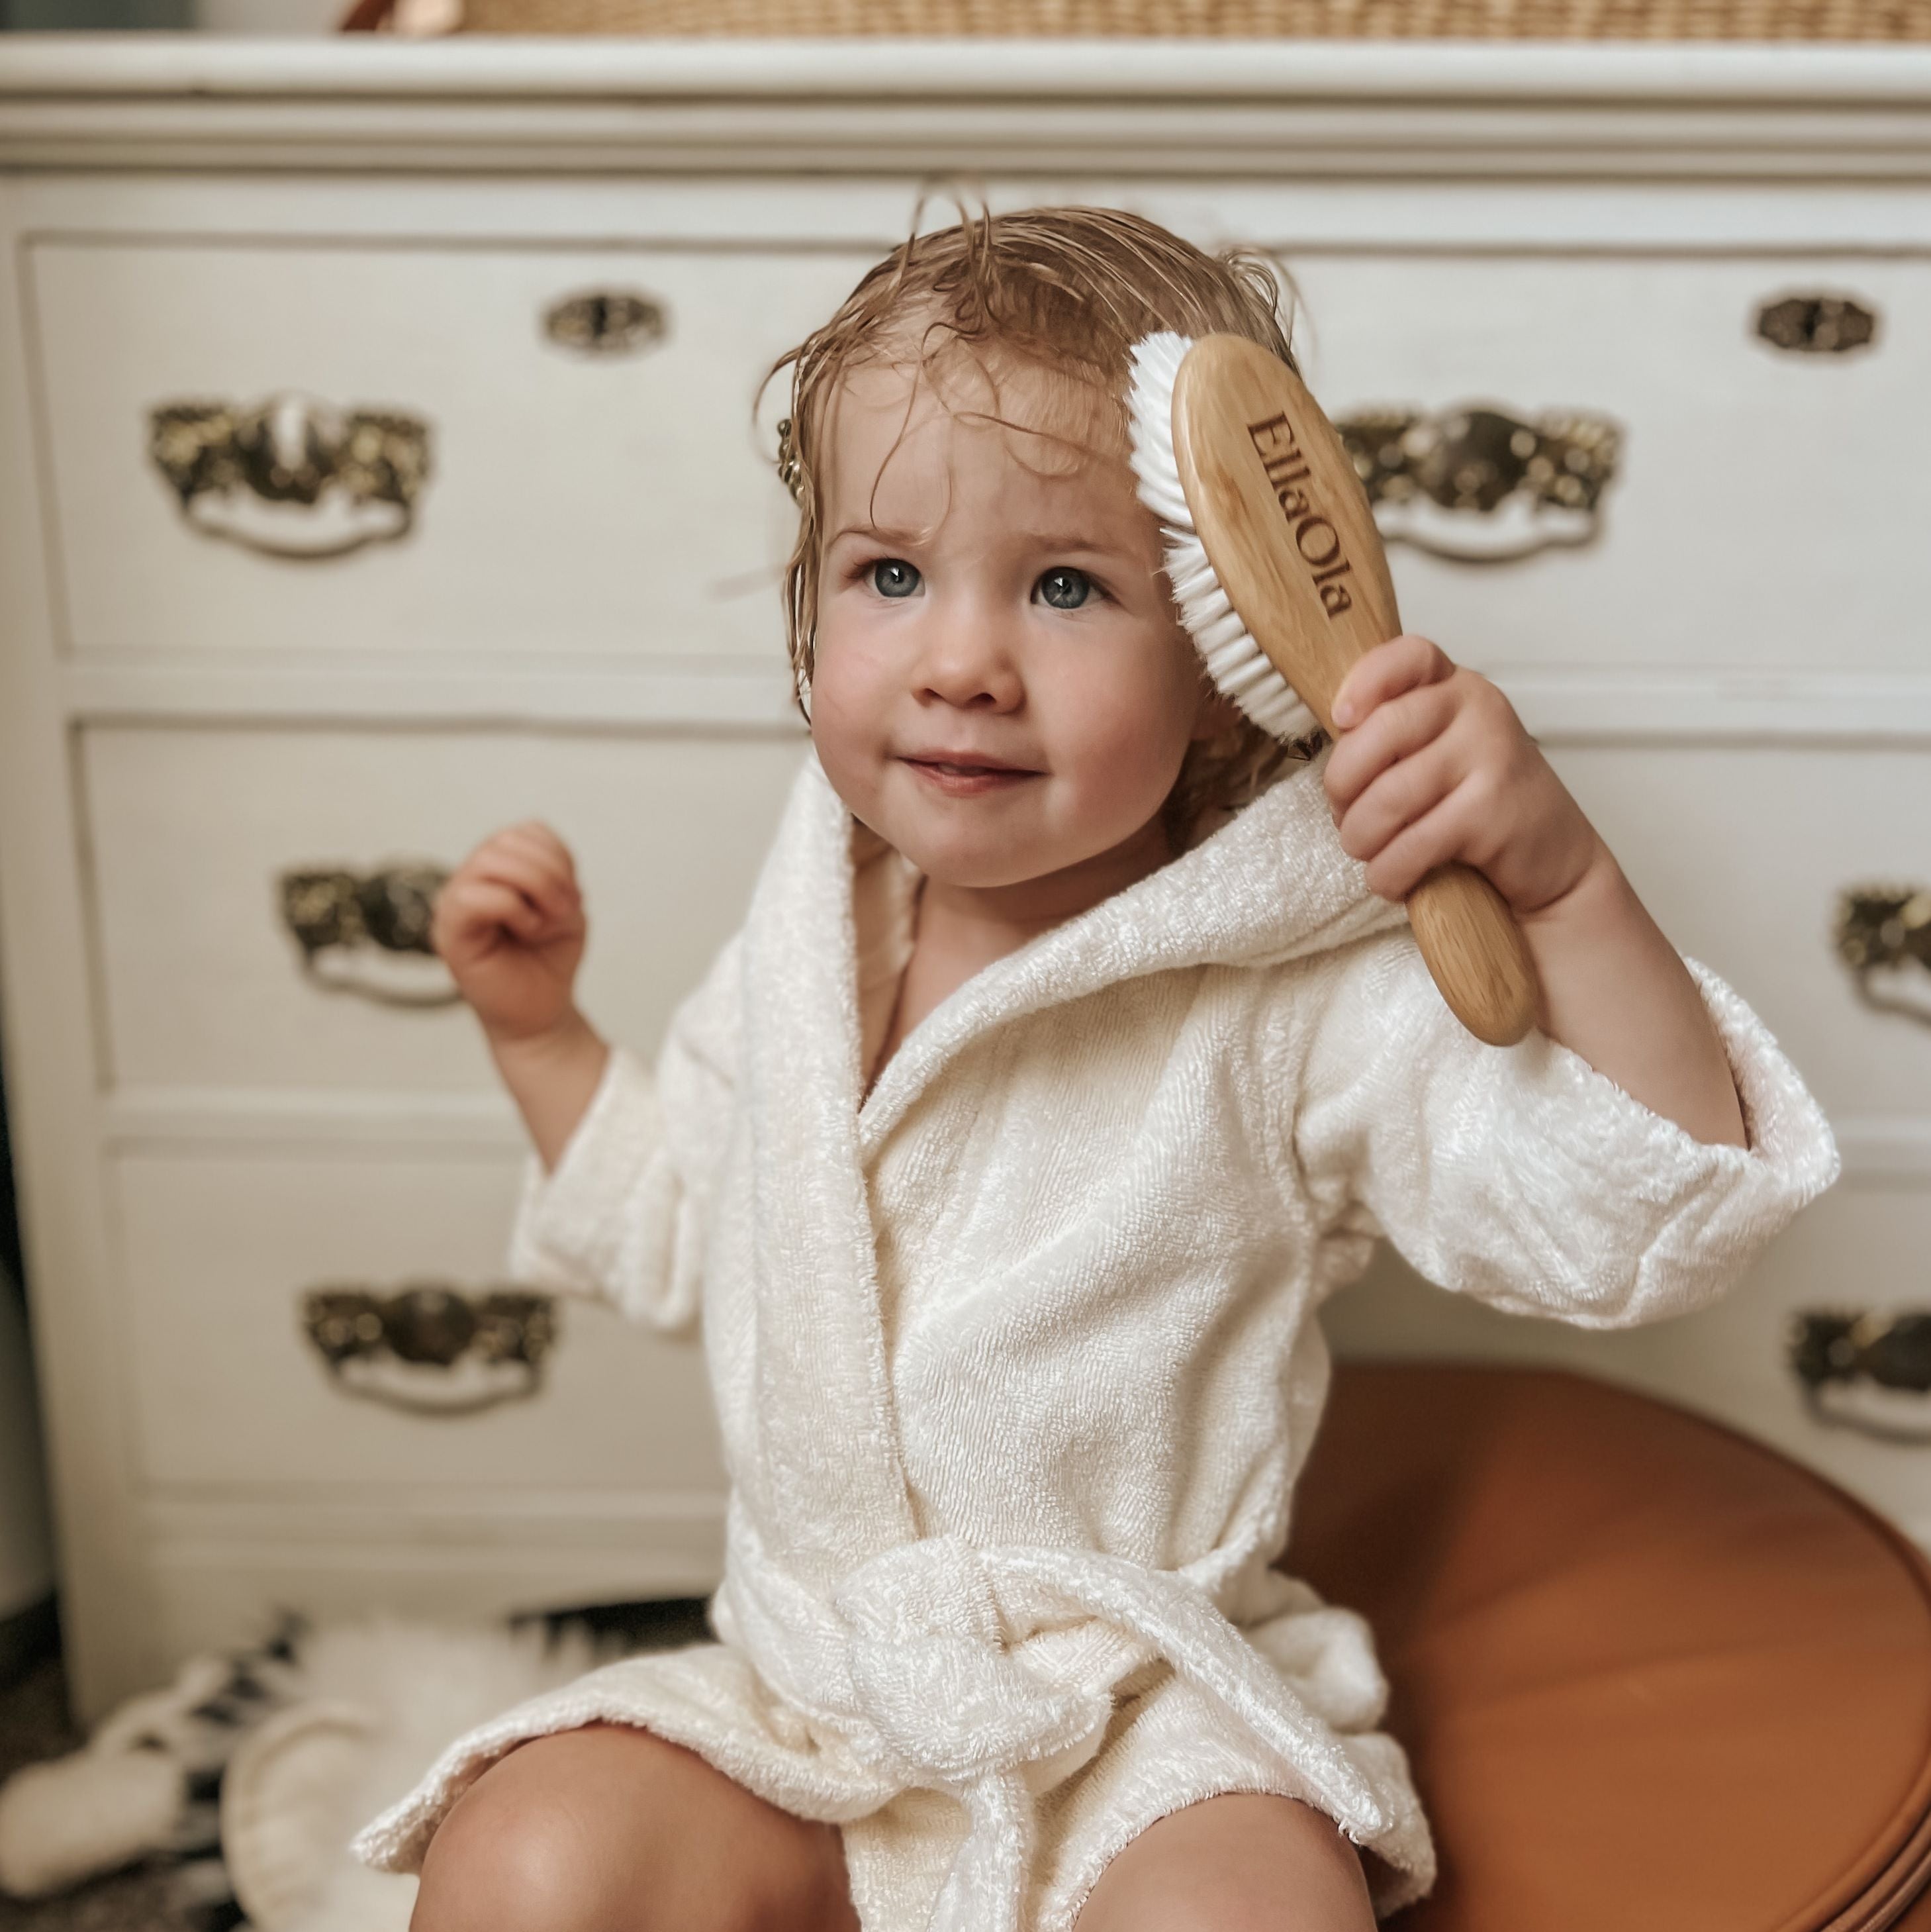 Baby/Toddler's Hair Brush – Shopbeautytools